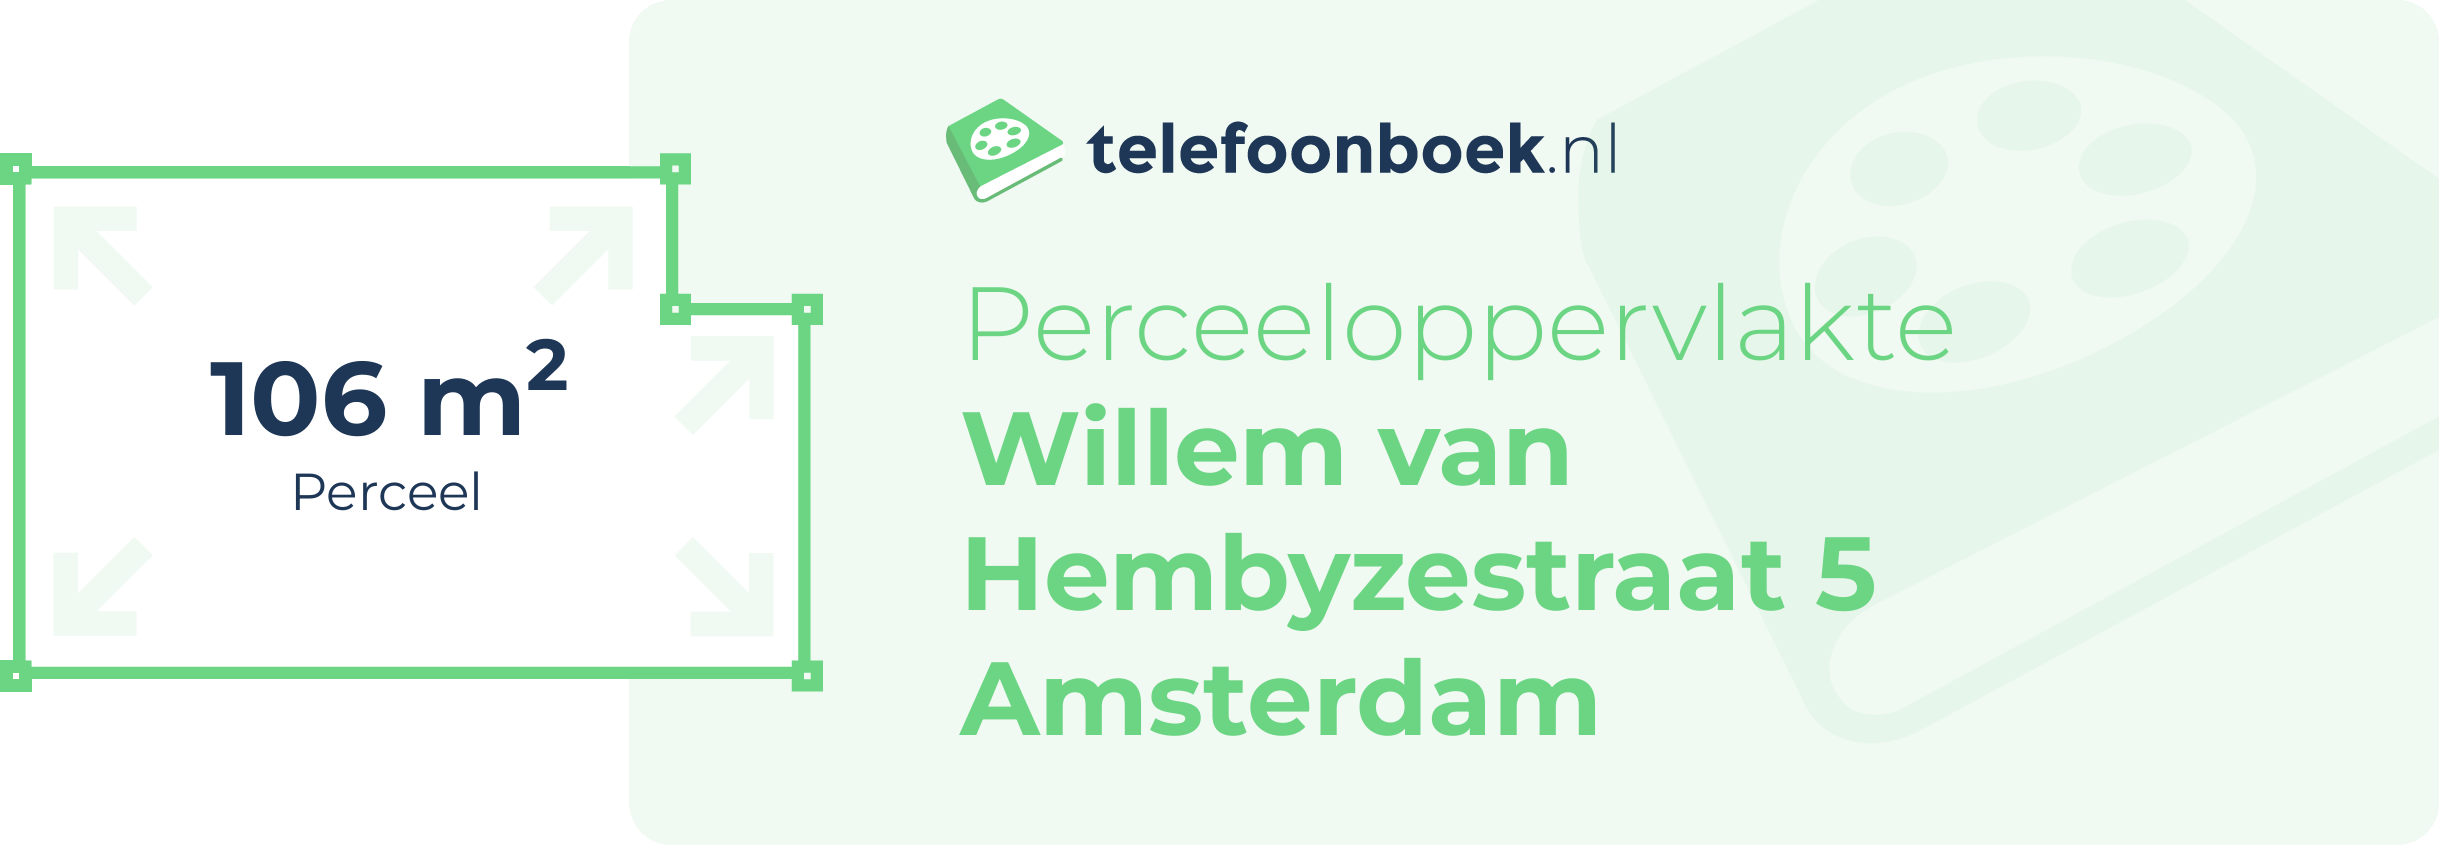 Perceeloppervlakte Willem Van Hembyzestraat 5 Amsterdam